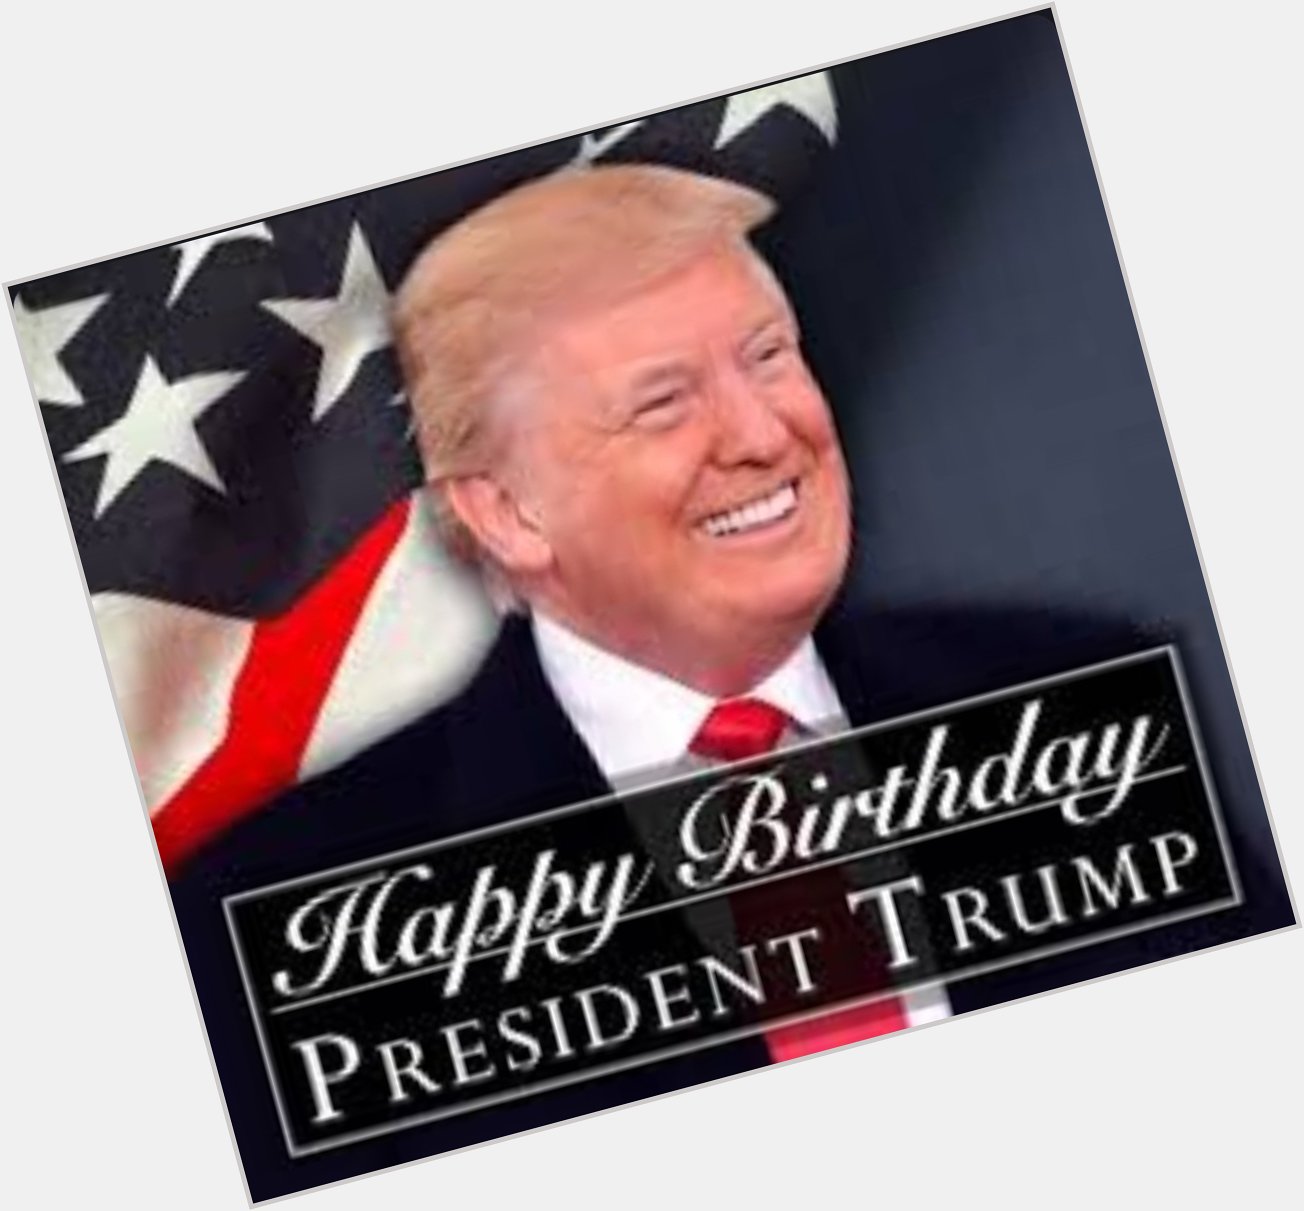 Happy Birthday, President Trump!  